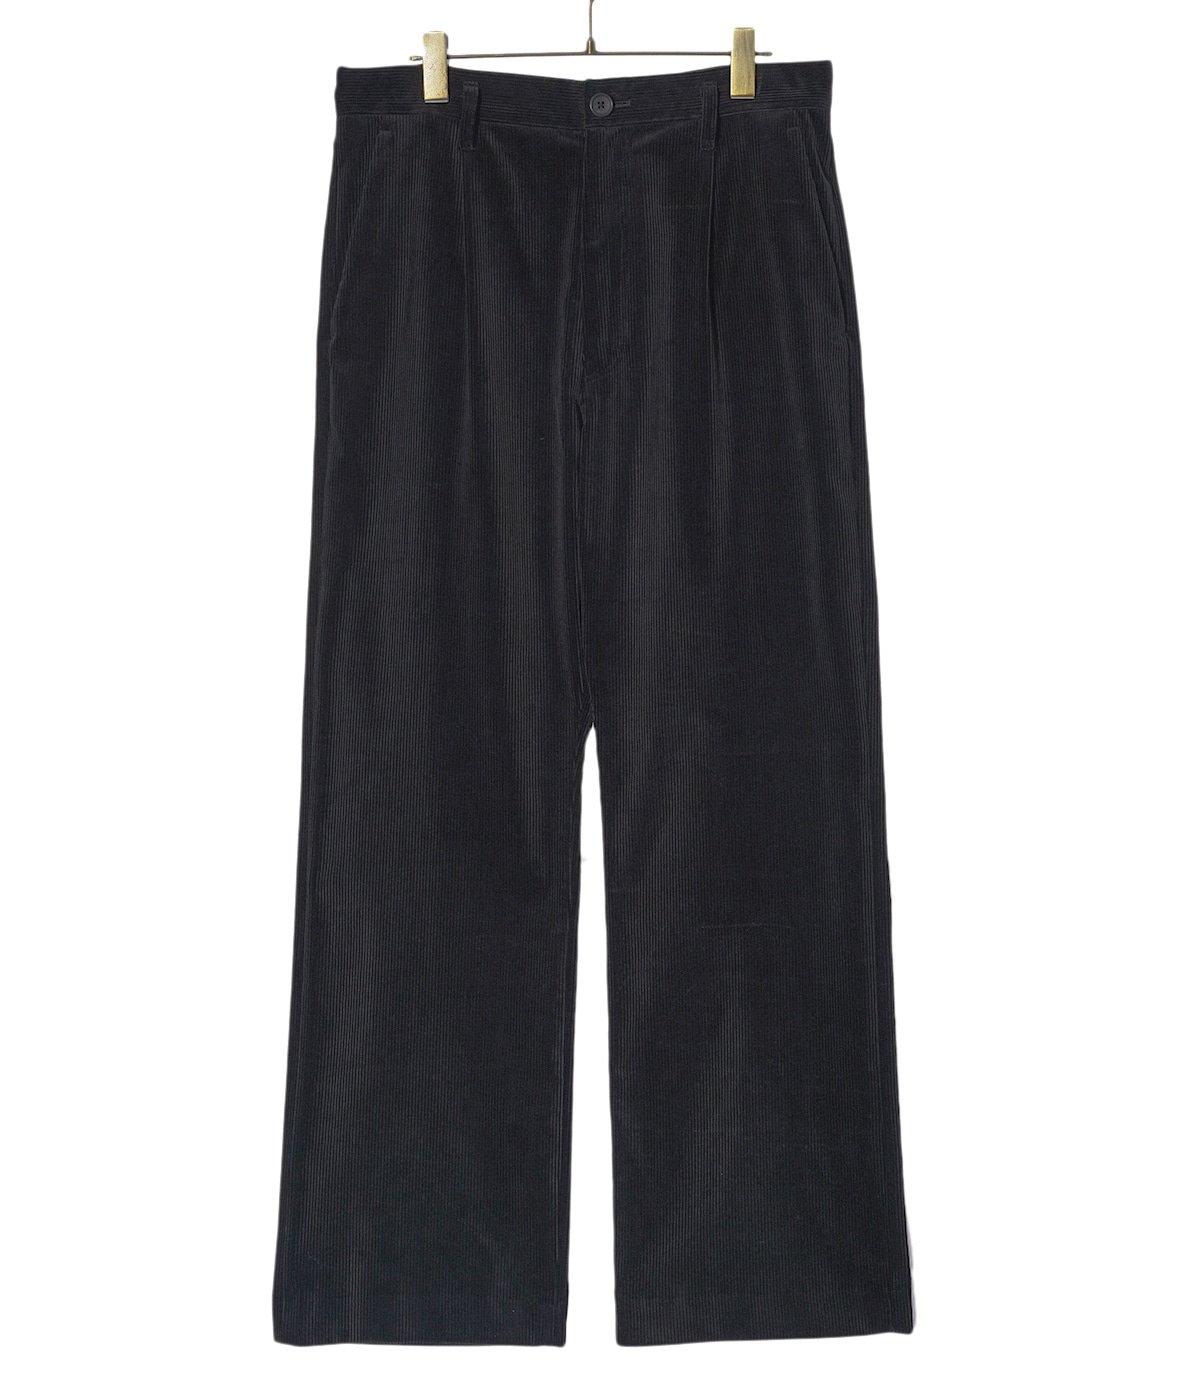 Corduroy Trousers | PORT BY ARK(ポートバイアーク) / パンツ コーデュロイパンツ (メンズ)の通販